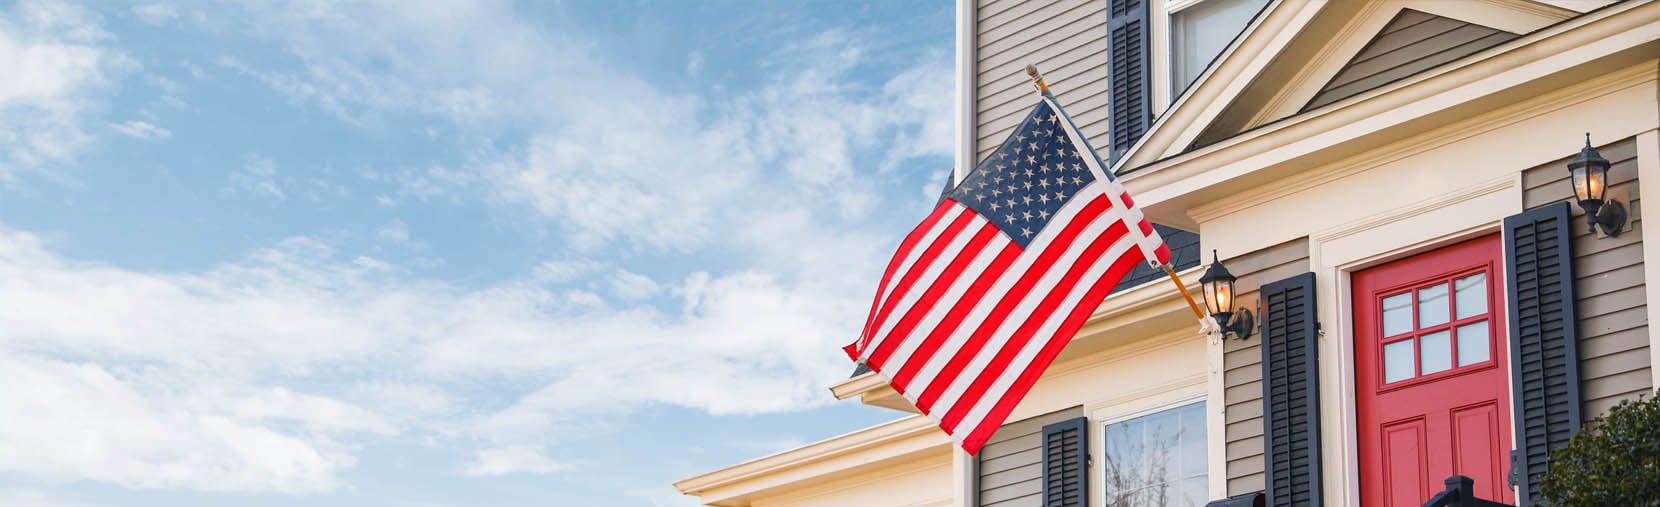 VAPurchase_US flag depicting historic freedom and american pride _582579240_Desktop